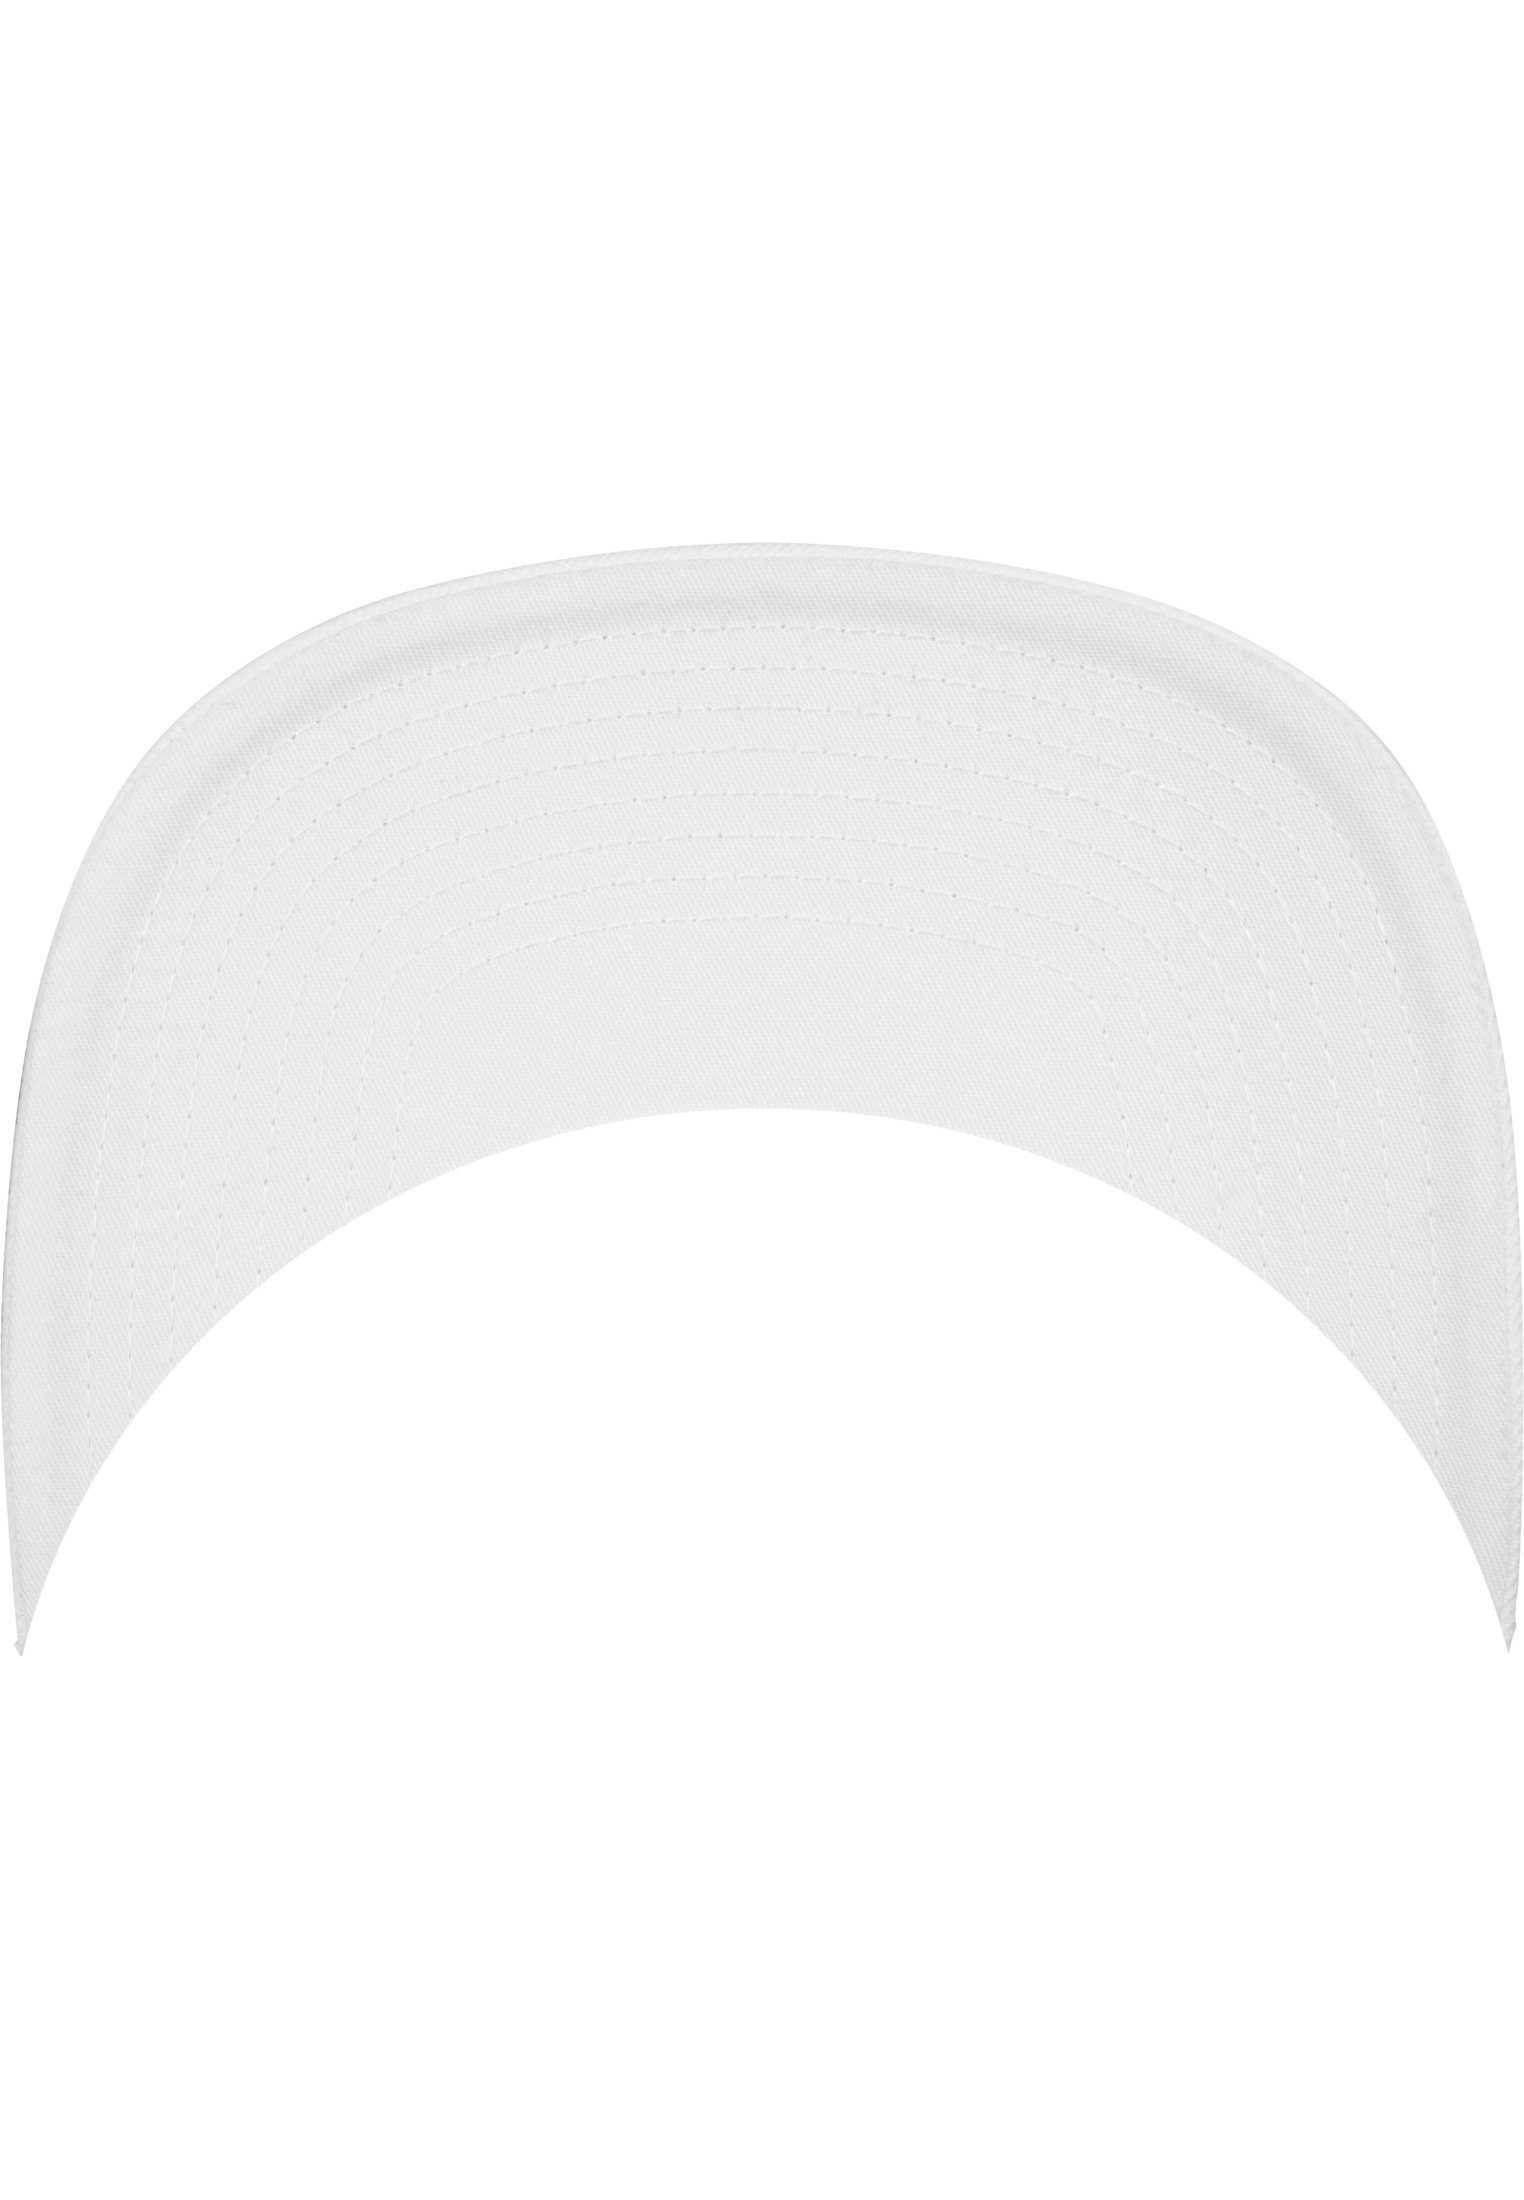 Flexfit Flex Cap Bandana Snapback Tie white/white Snapback